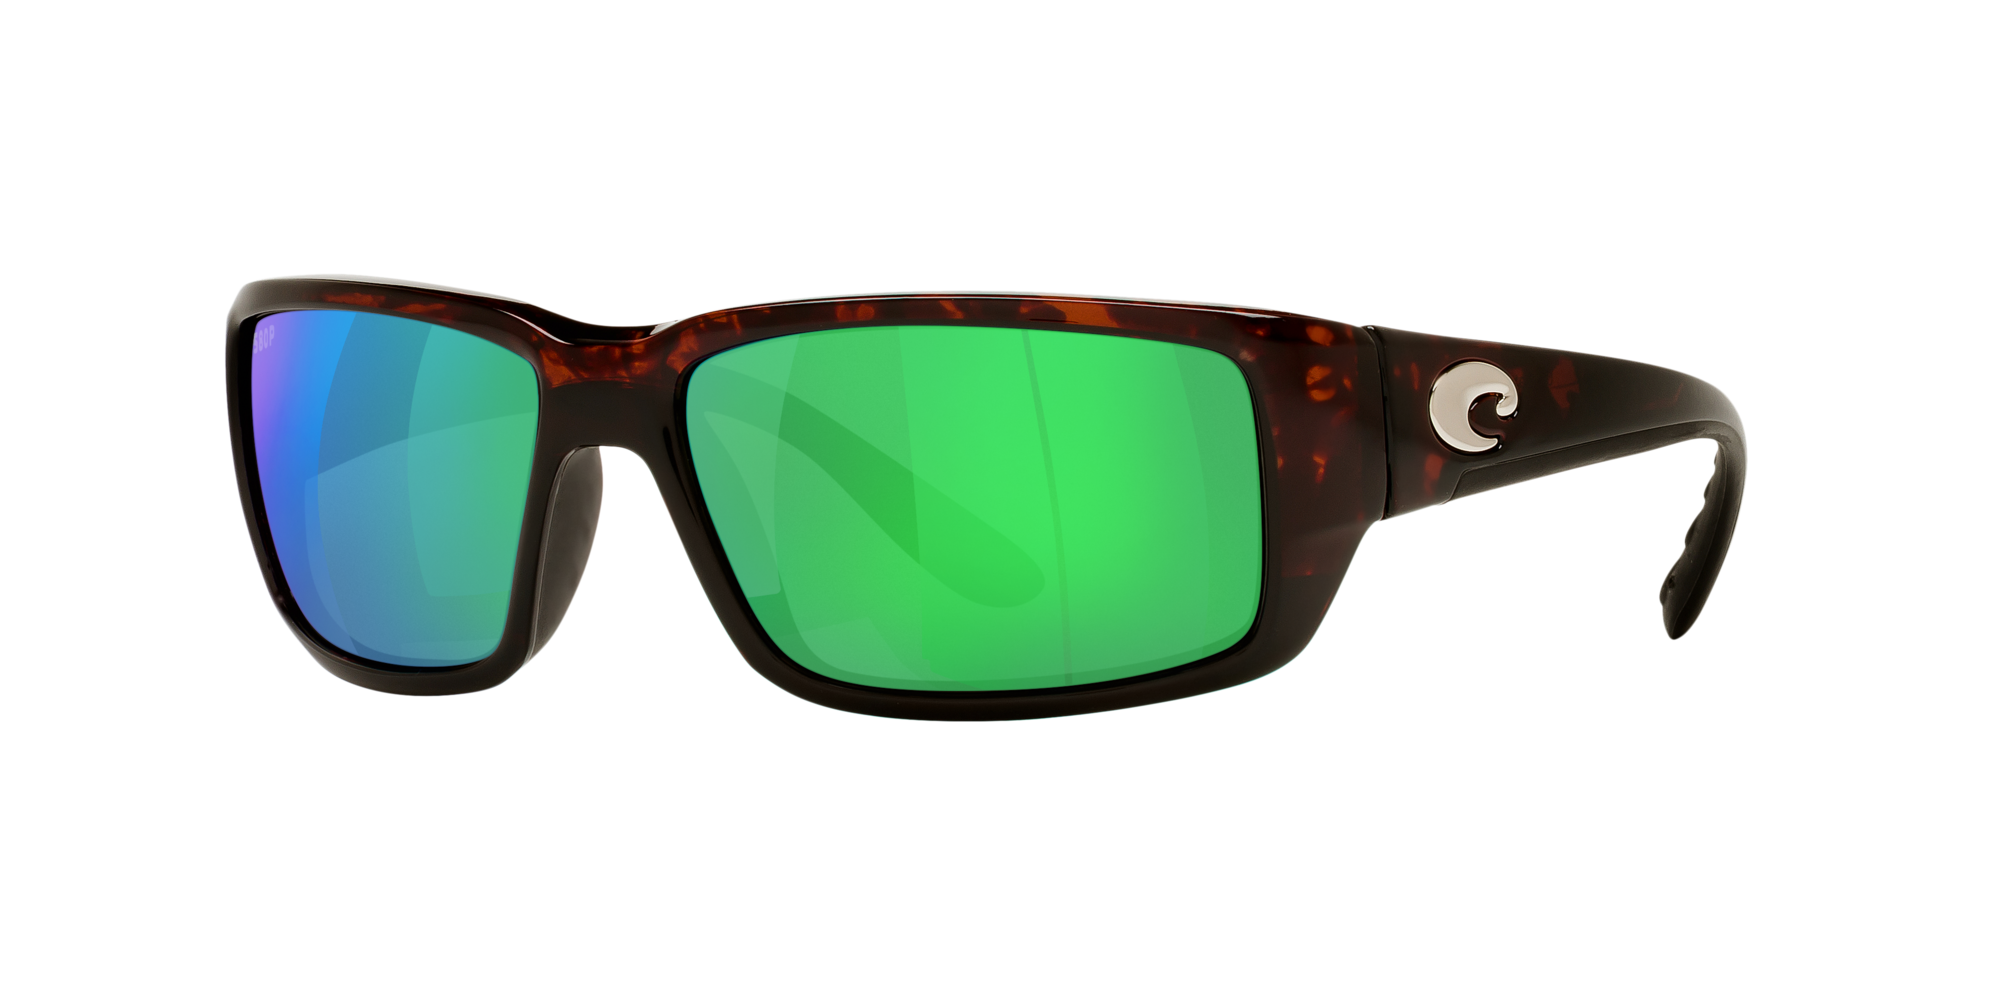 COSTA DEL MAR Hammerhead 580 POLARIZED Sunglasses Tortoise/Green 580G NEW